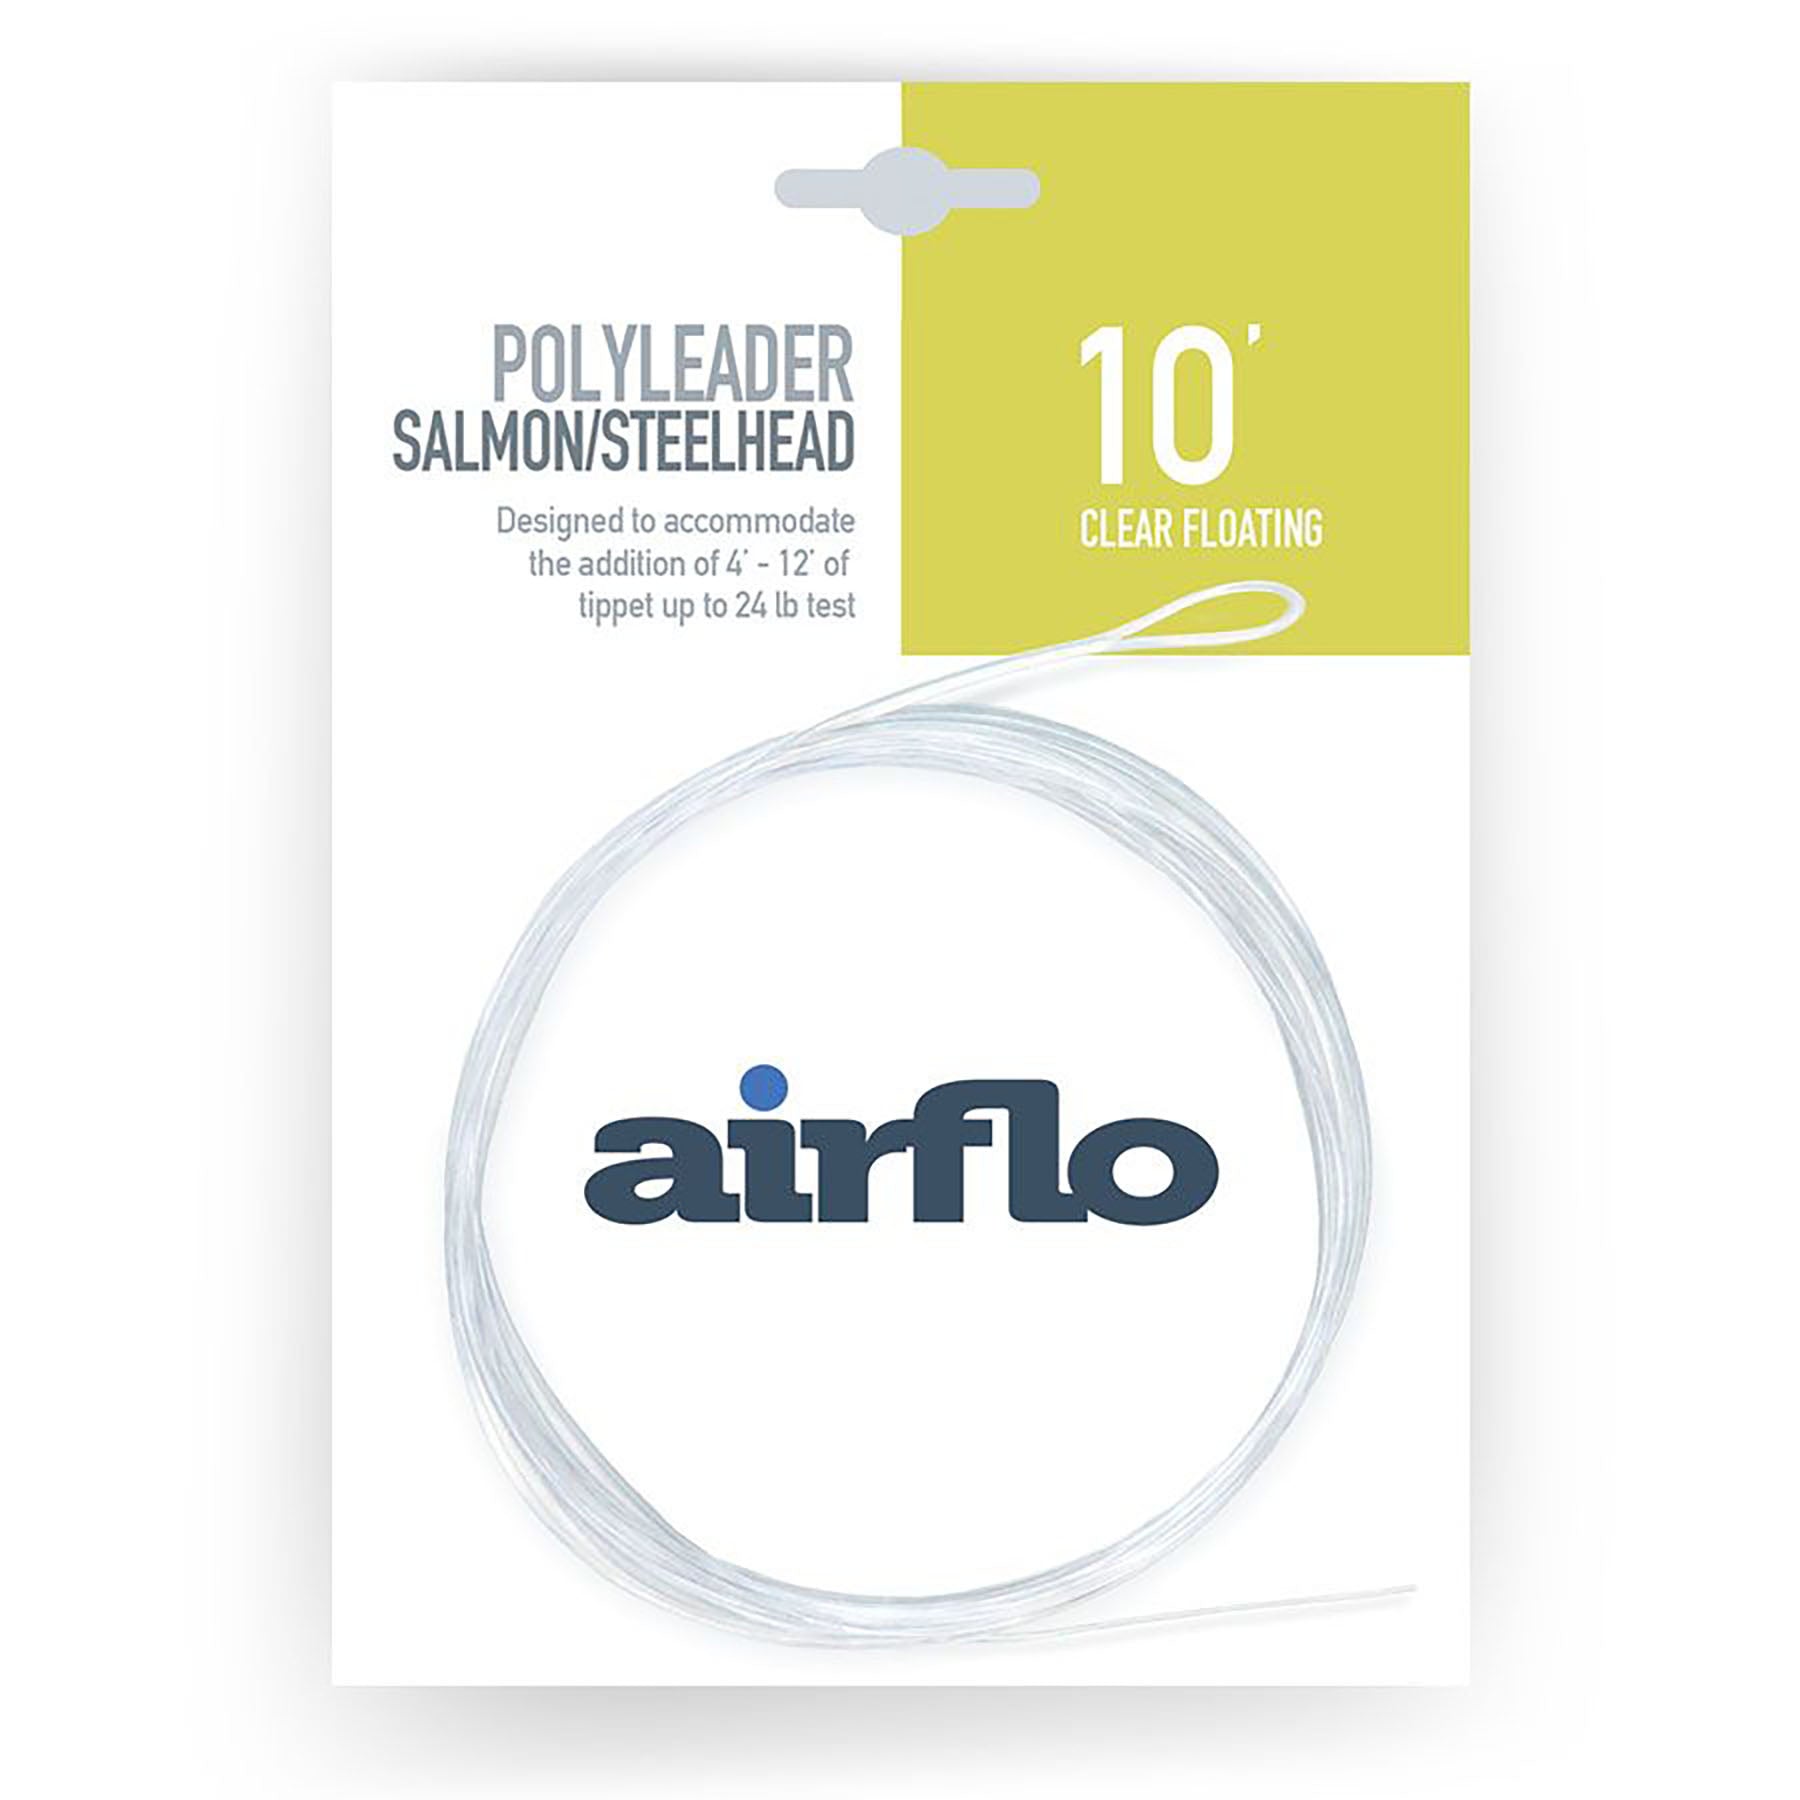 Airflo Polyleader Salmon/Steelhead